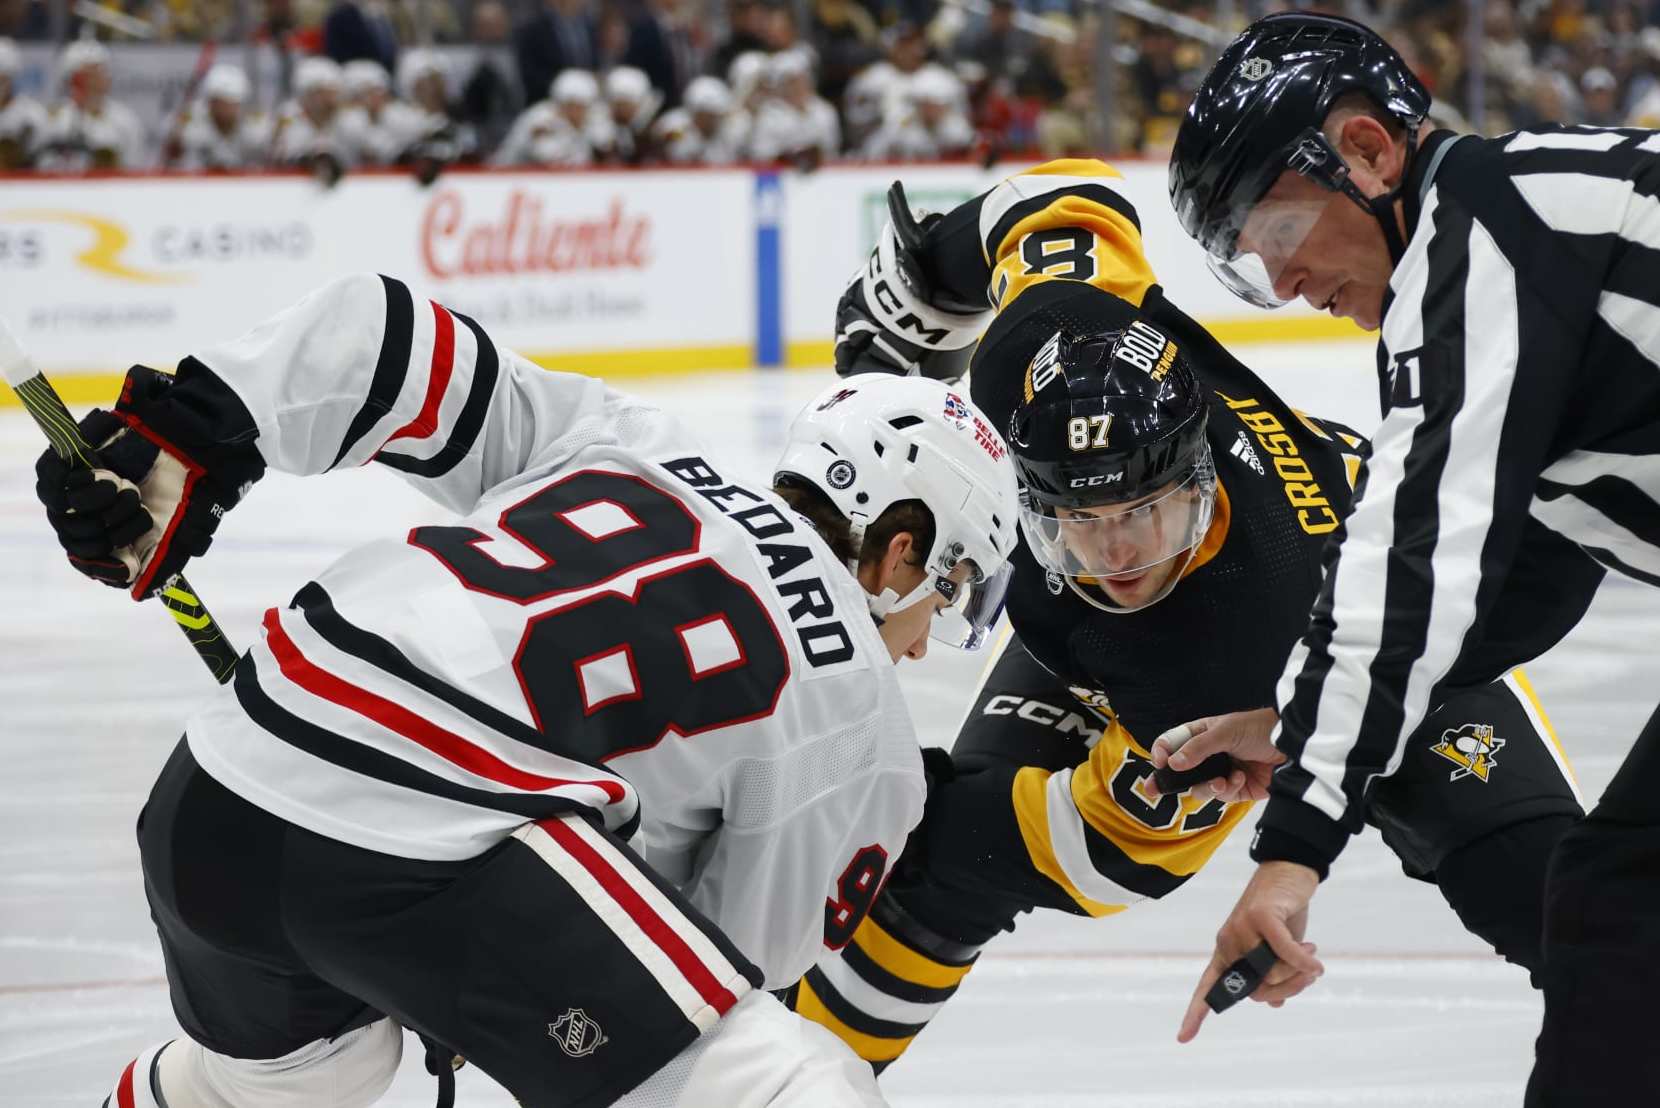 Bedard nets 1st NHL goal, but Hawks fall 3-1 at Boston – Thursday